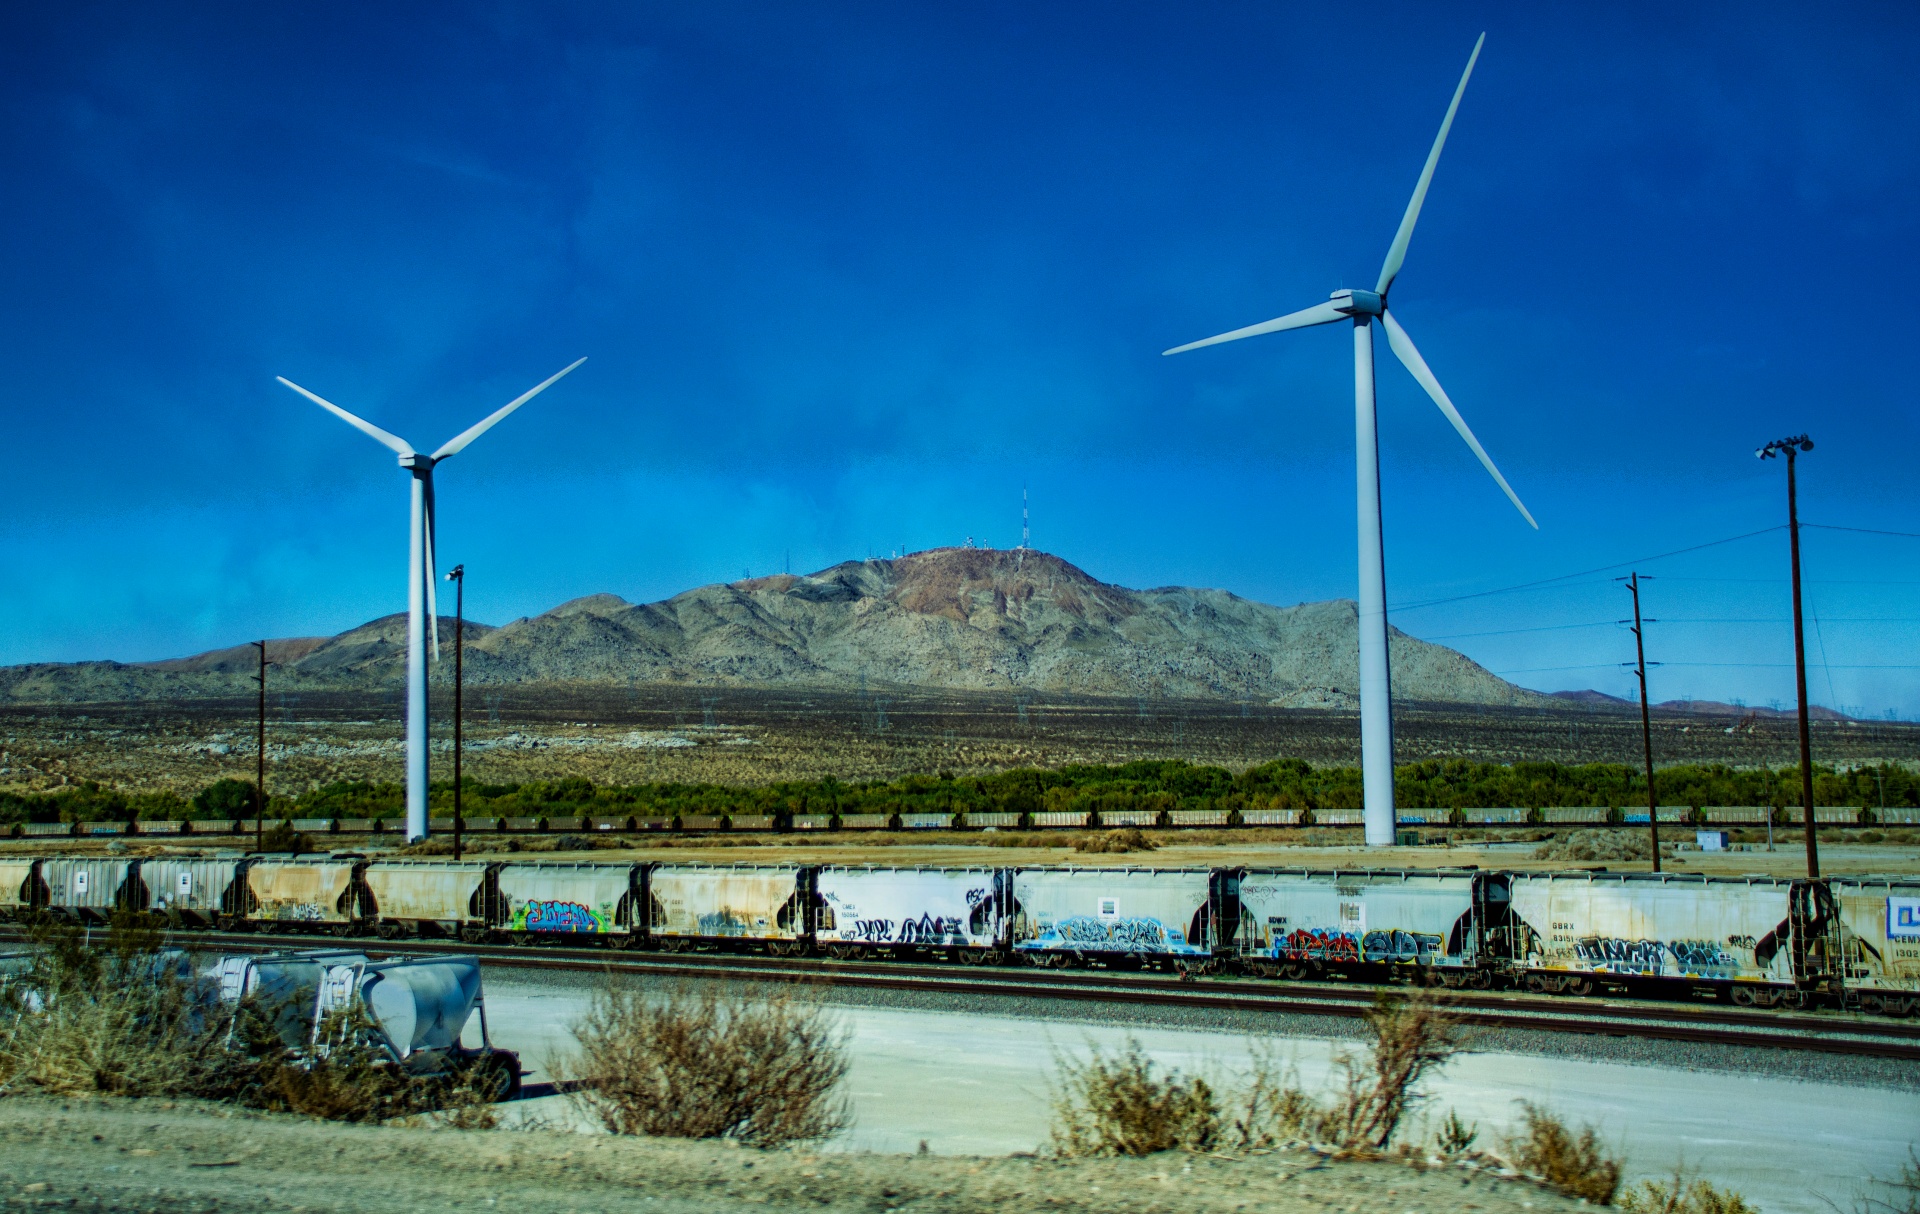 Trains And Wind Turbines